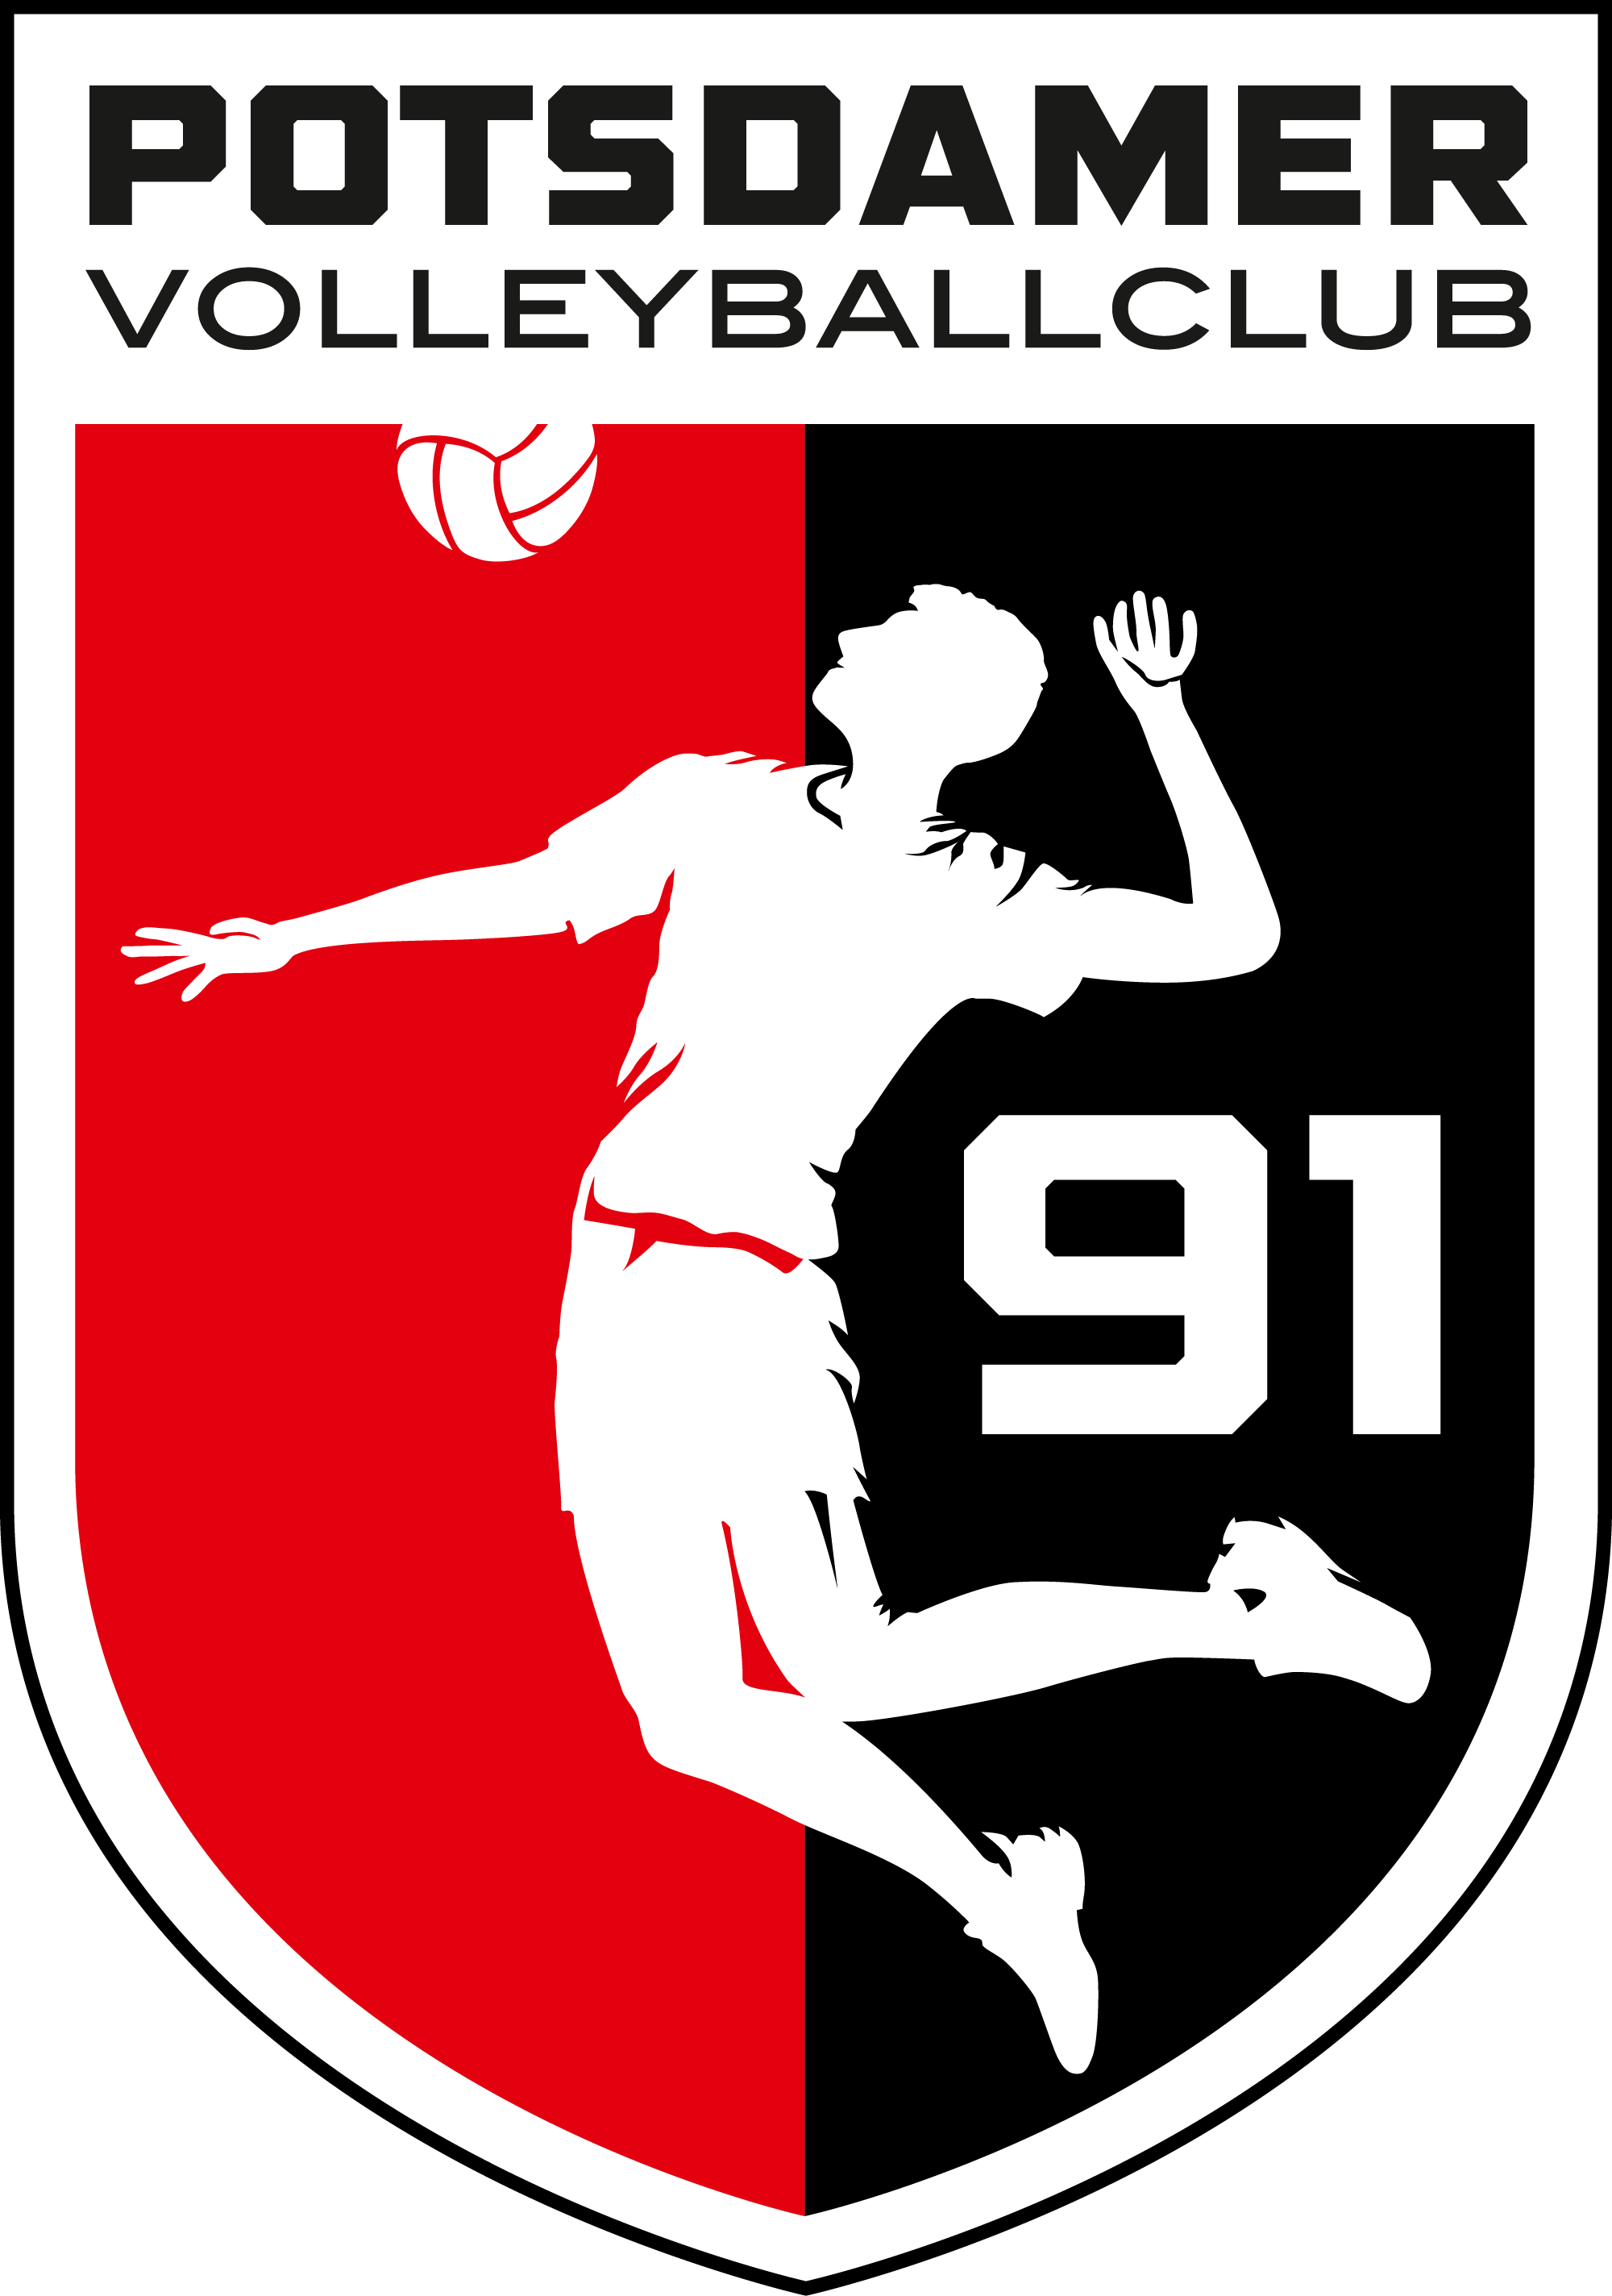 Potsdamer Volleyballclub 91